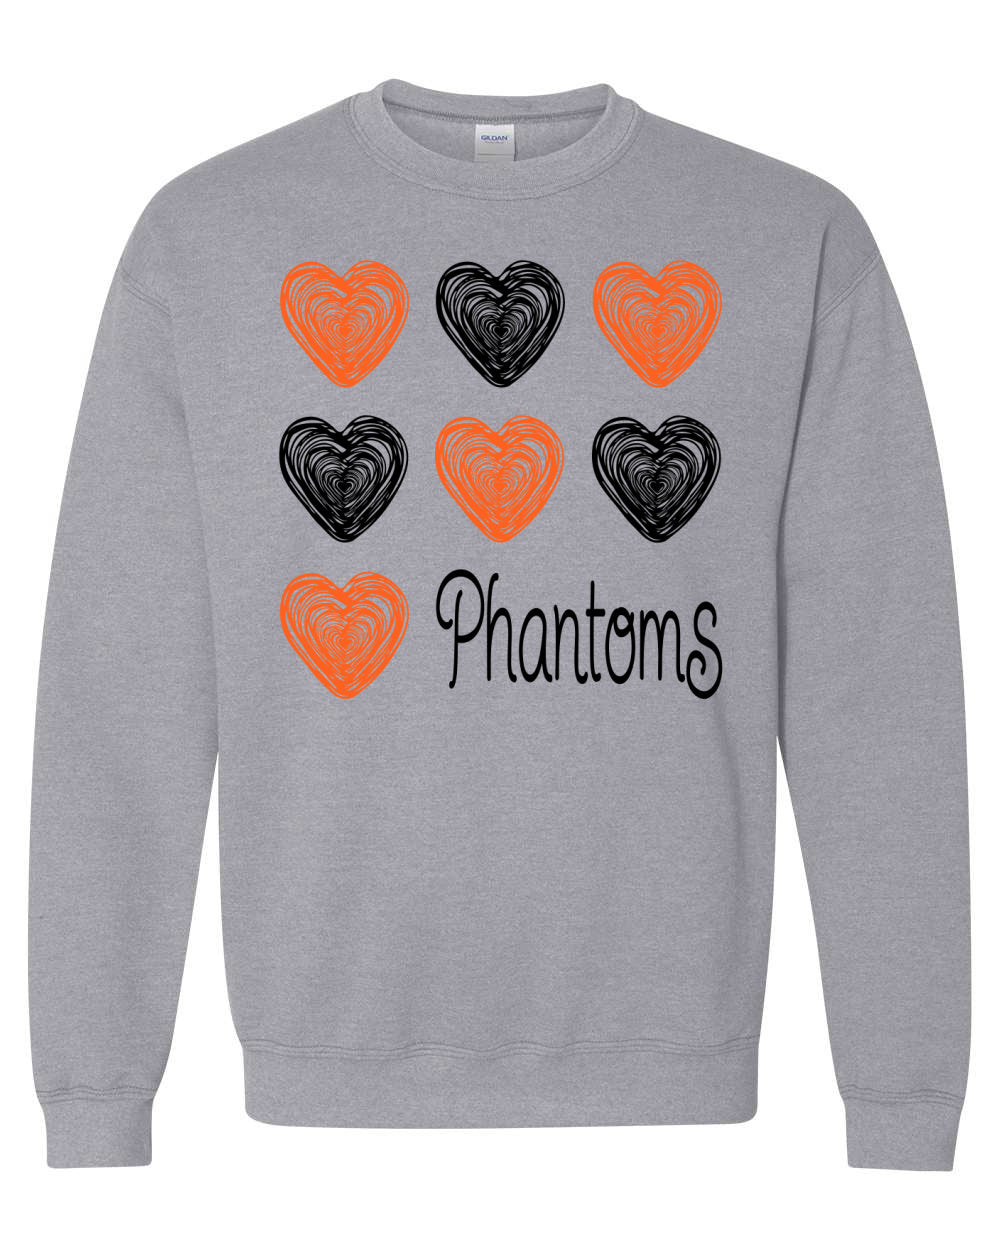 West De Pere Phantoms Merch - Crewneck Sweatshirt- Doodle Hearts